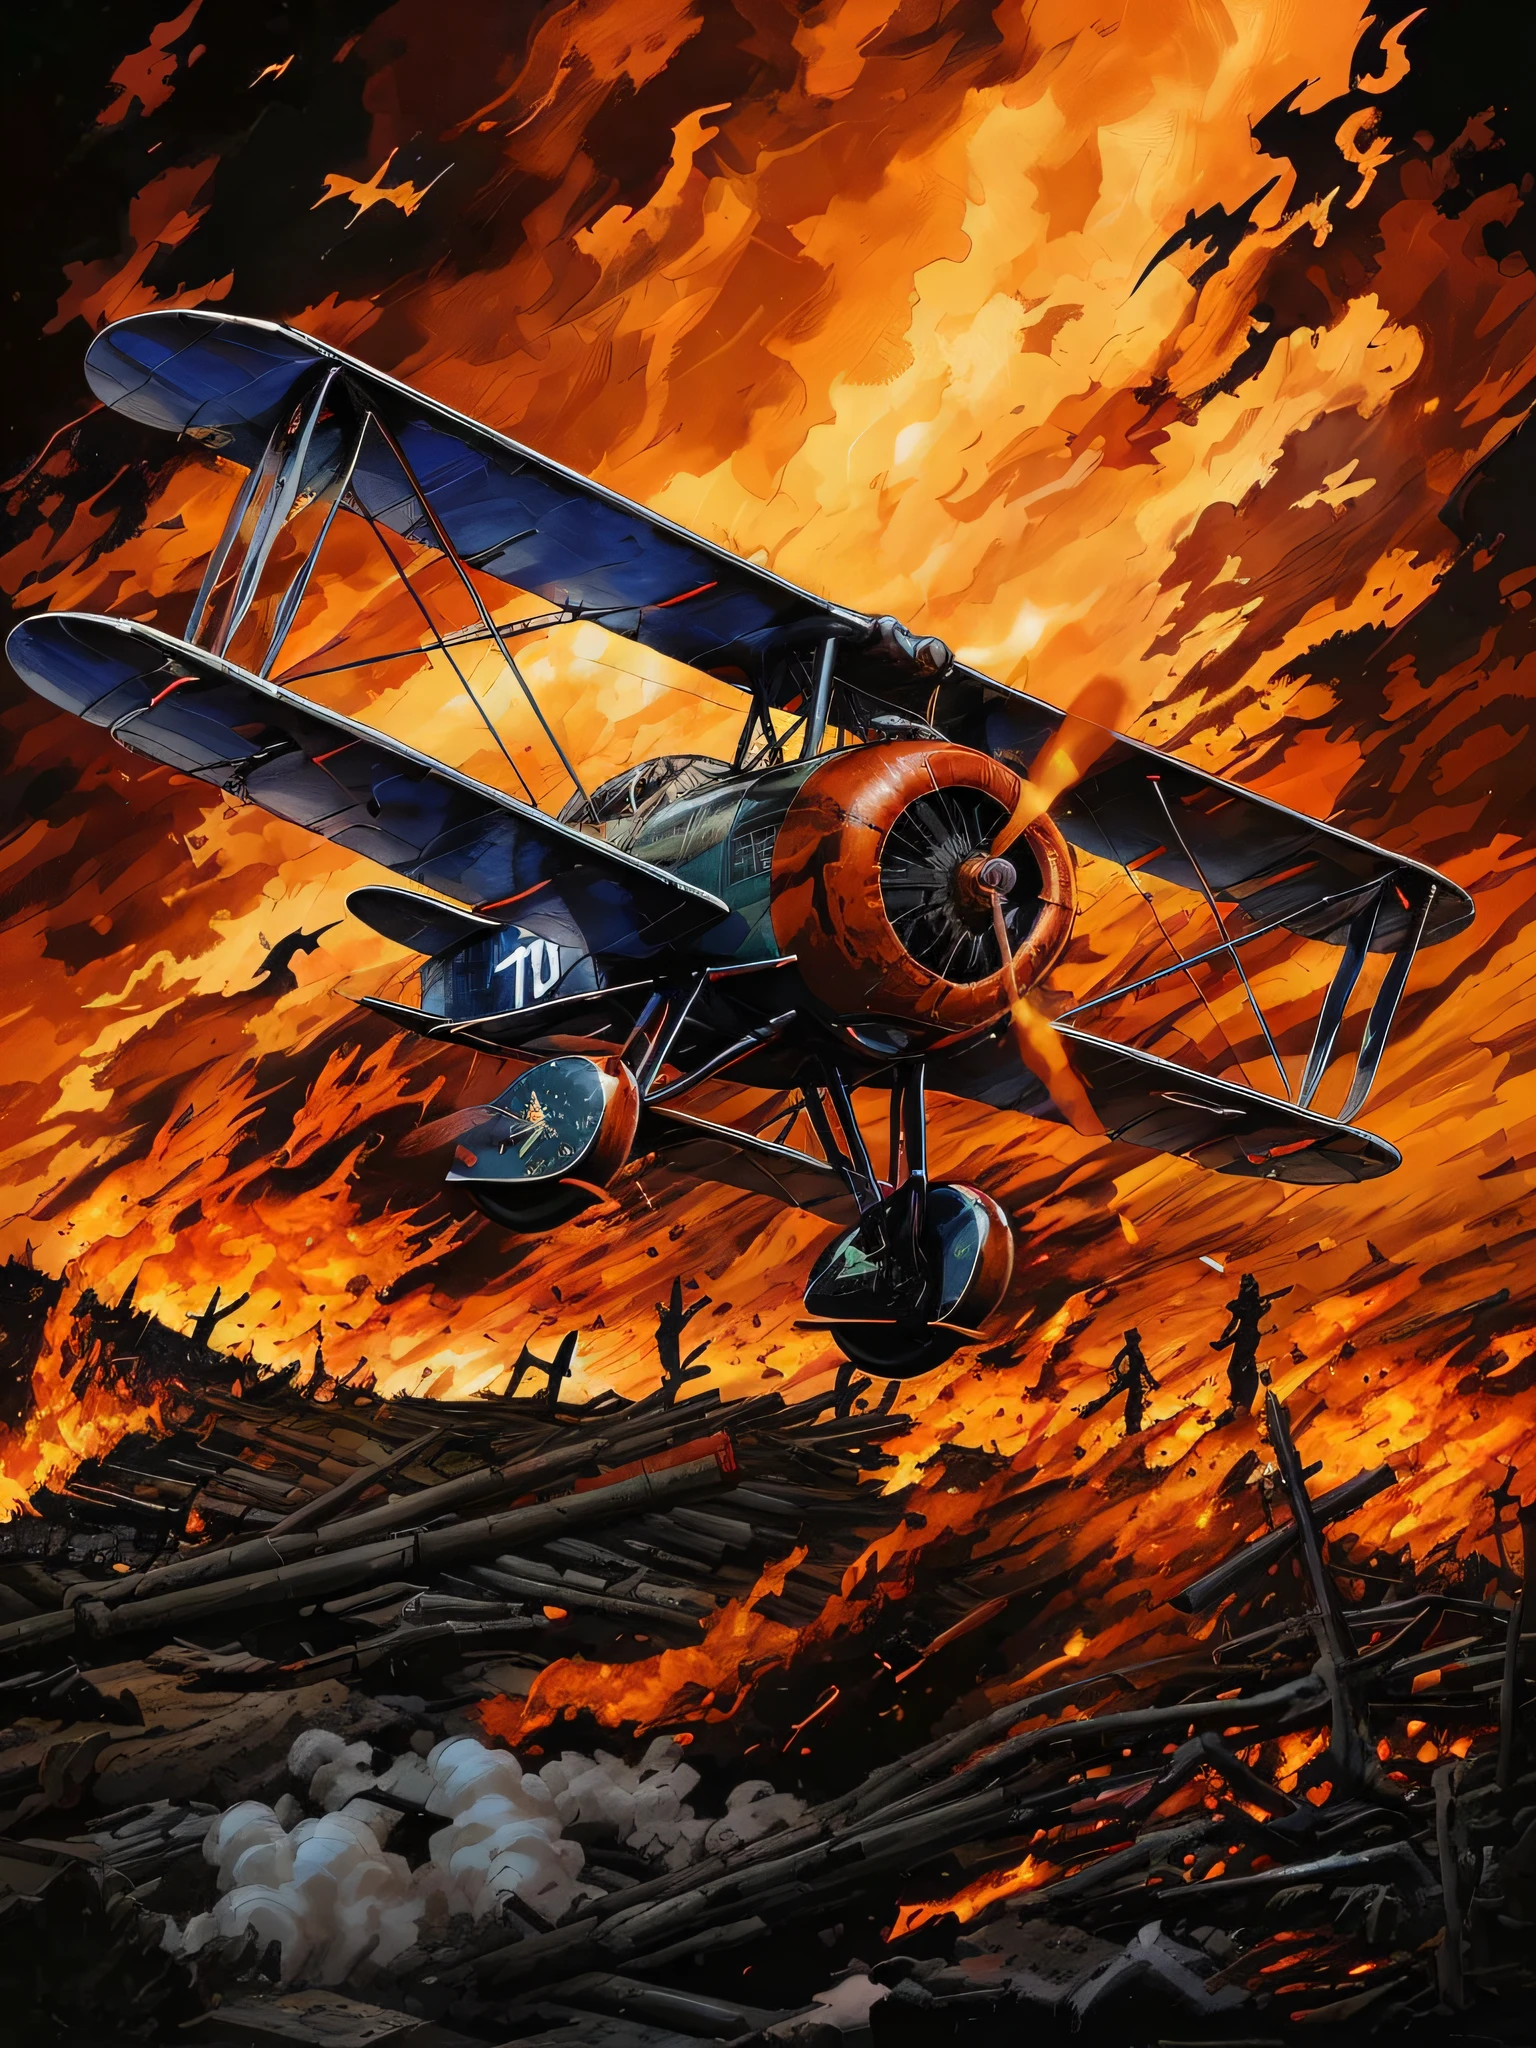 A painting of a 双翼飞机 flying over a field，背景是火焰, 作者：David B 的插圖. 馬蒂爾, 作者：迈克尔·苏特芬, 作者：提姆·希爾德布蘭特, 作者：David B 的插圖. 索倫森, 双翼飞机, 餘燼飛揚, 艺术品, 作者：霍華德·里昂, 作者：乔·尤斯科, 作者：鮑伯林伍德, 作者：賈森·埃德米斯頓, 燃烧的战场背景, 官方艺术作品